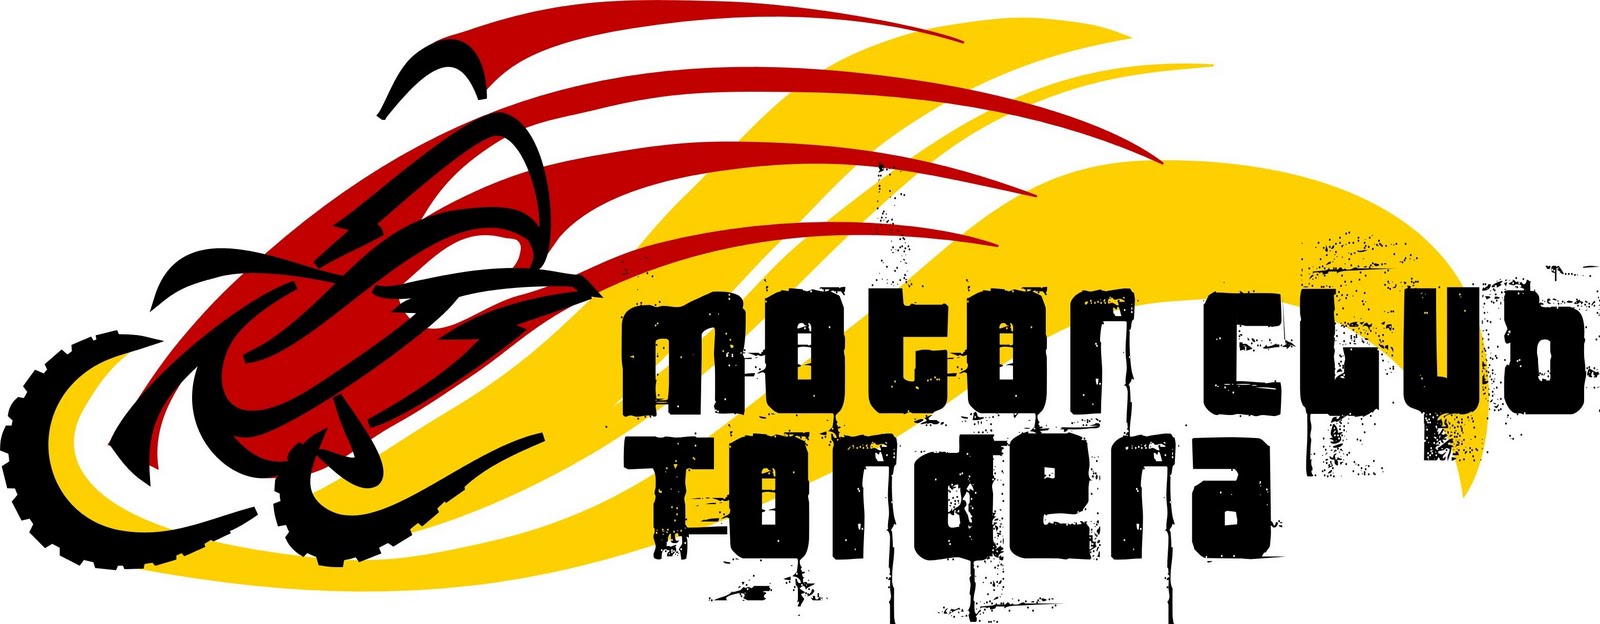 Motor Club Tordera